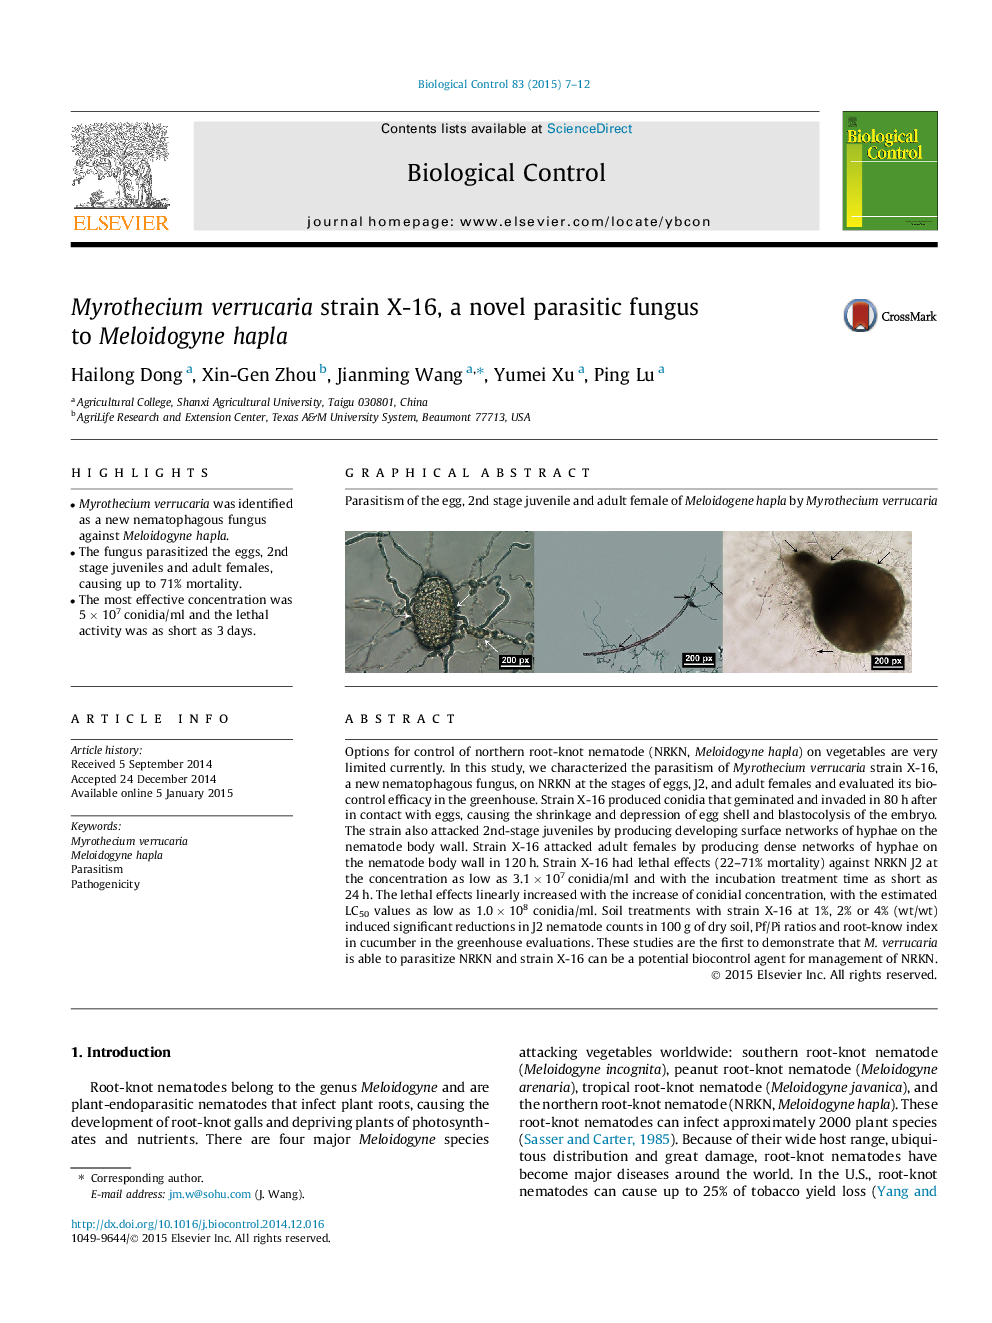 Myrothecium verrucaria strain X-16, a novel parasitic fungus to Meloidogyne hapla